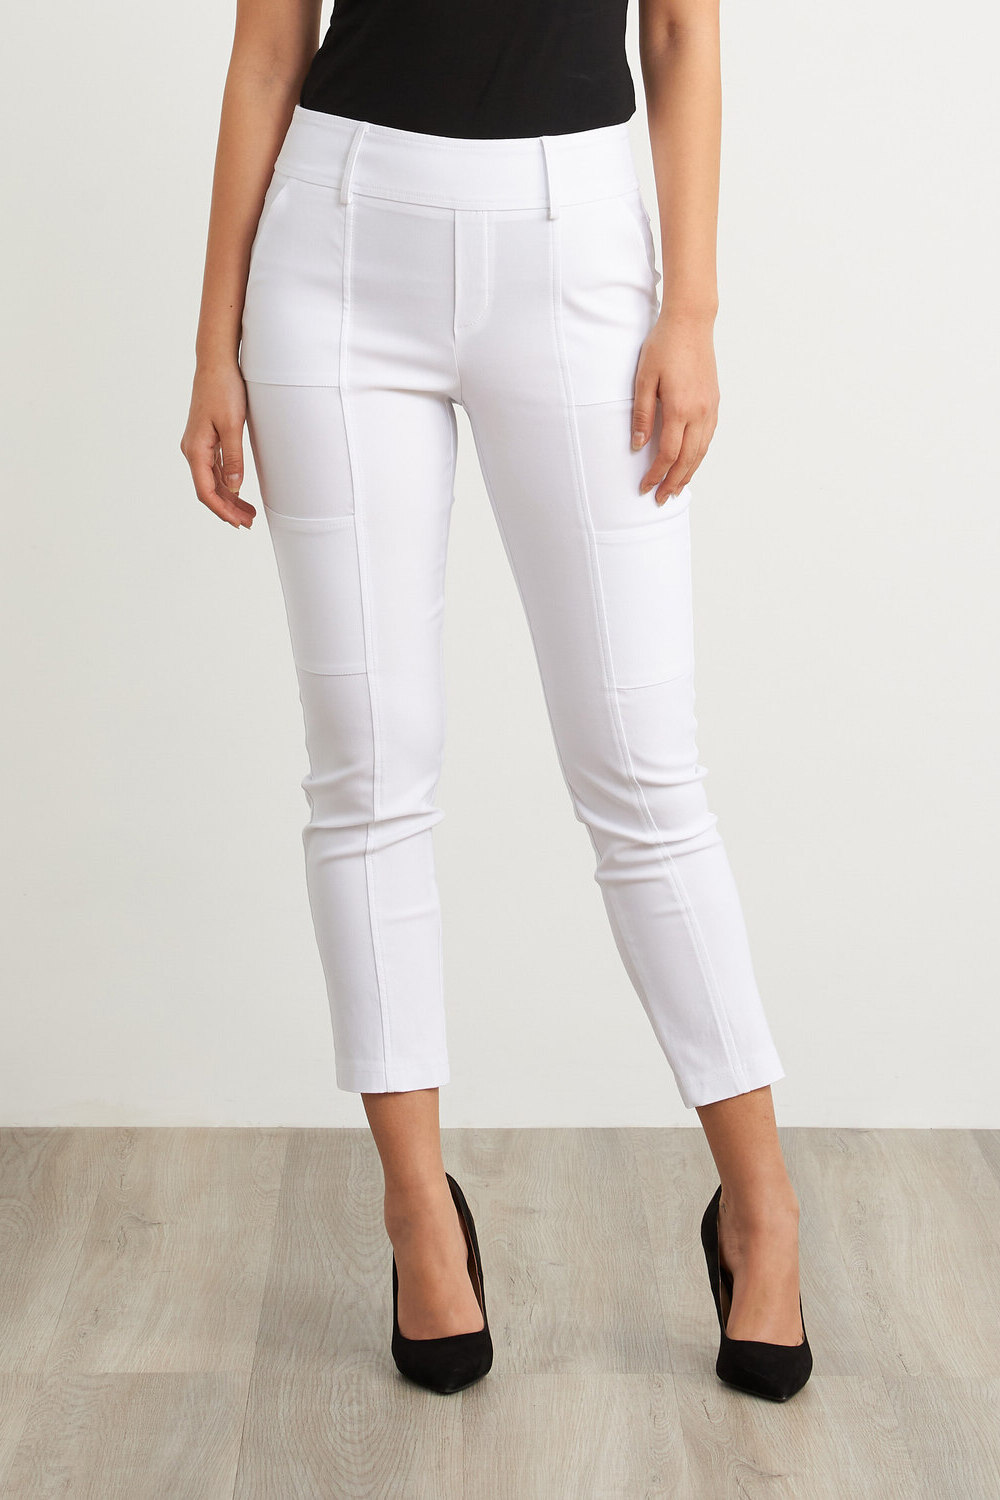 Joseph Ribkoff High-Waisted Pants Style 212282. White